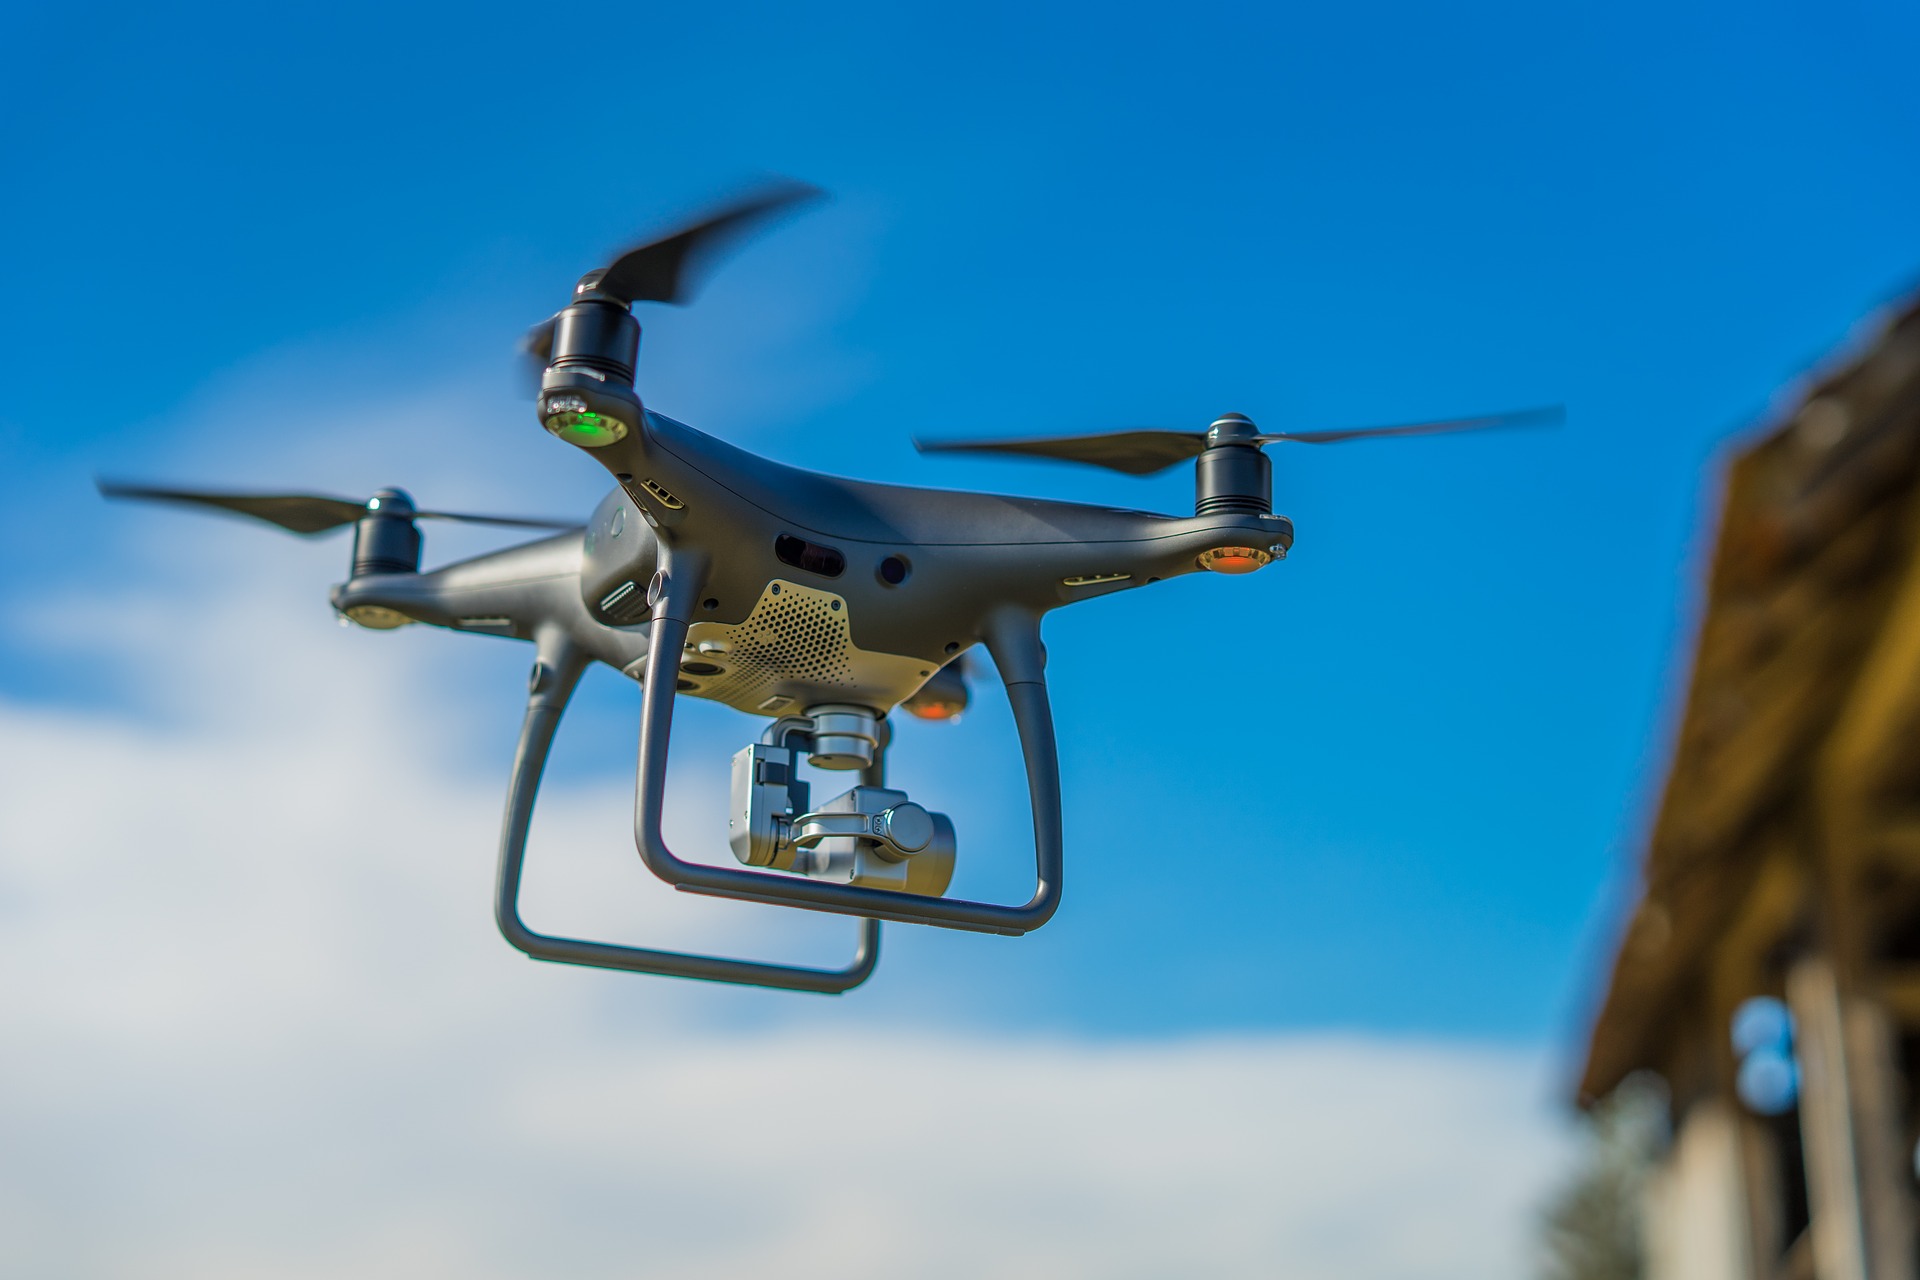 Kopalniany dron monitoruje szkody górnicze